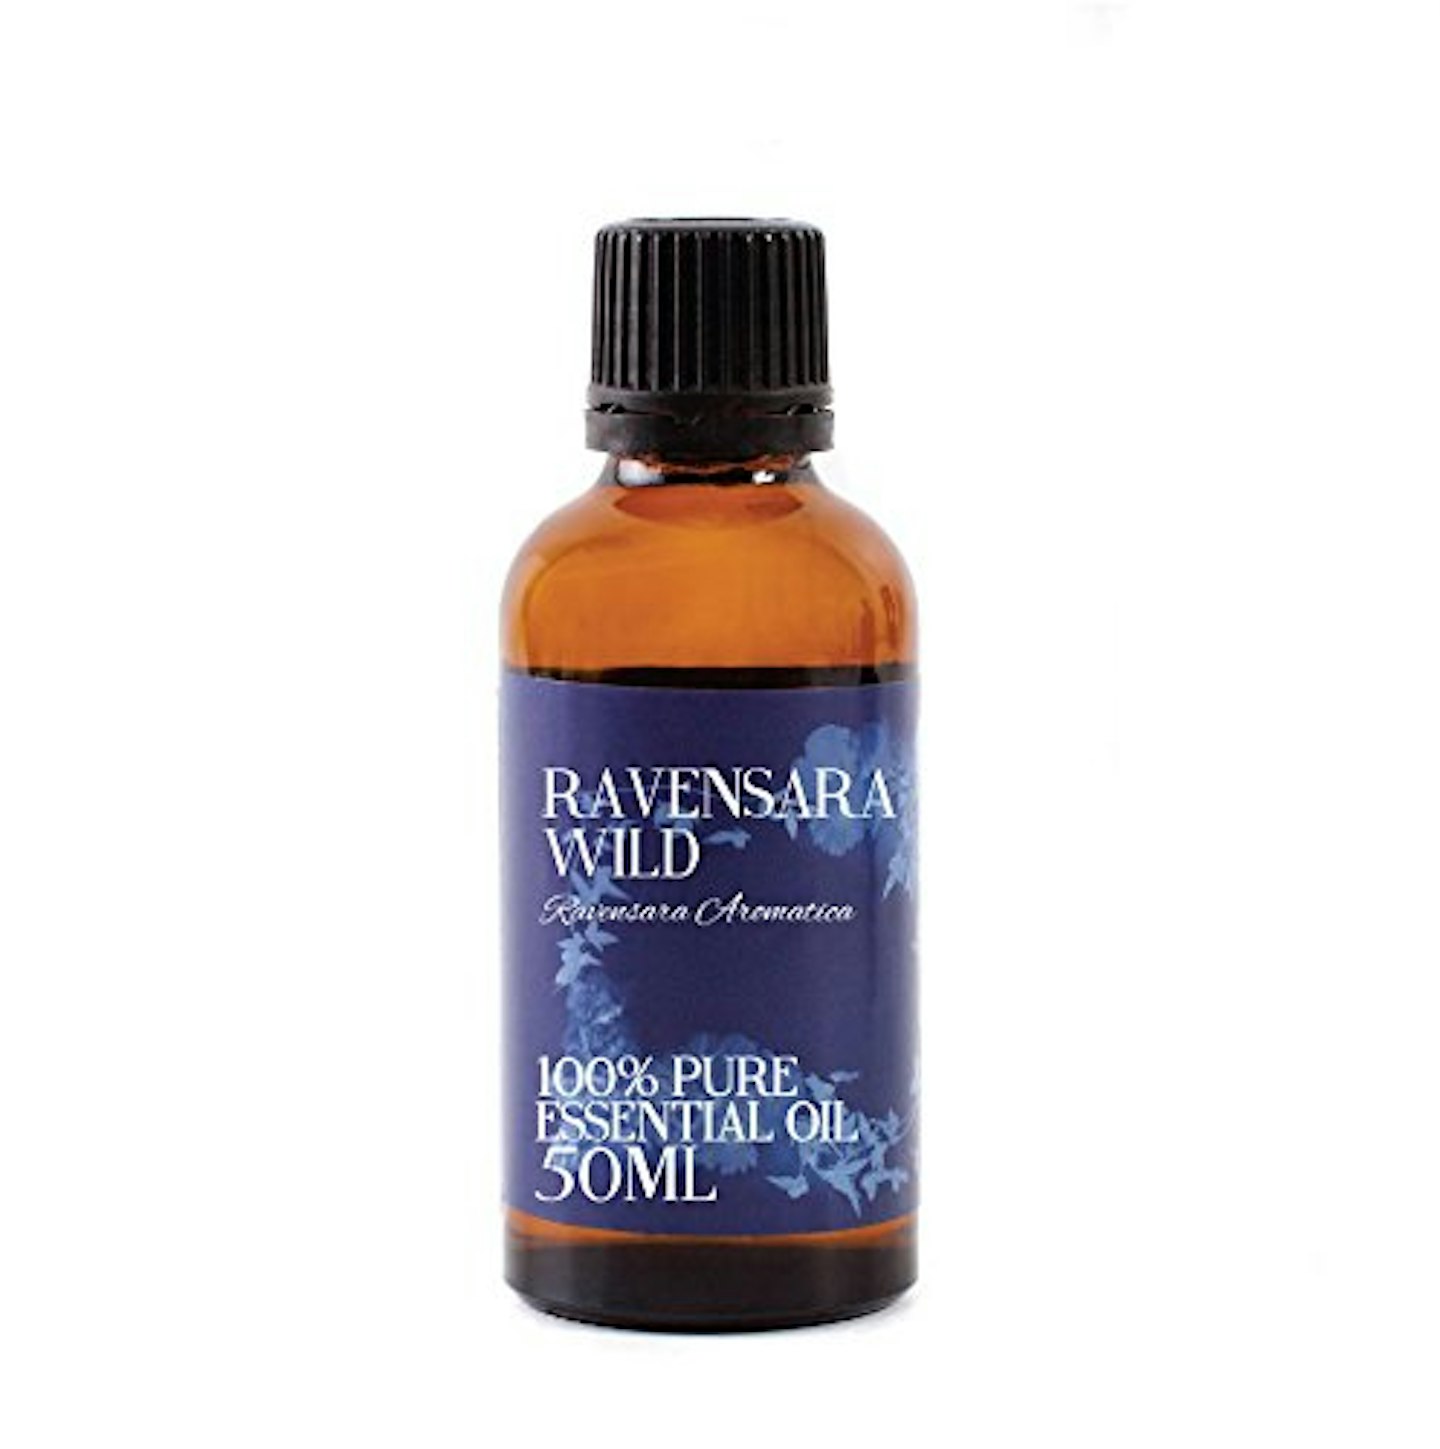 Ravensara Wild Essential Oil